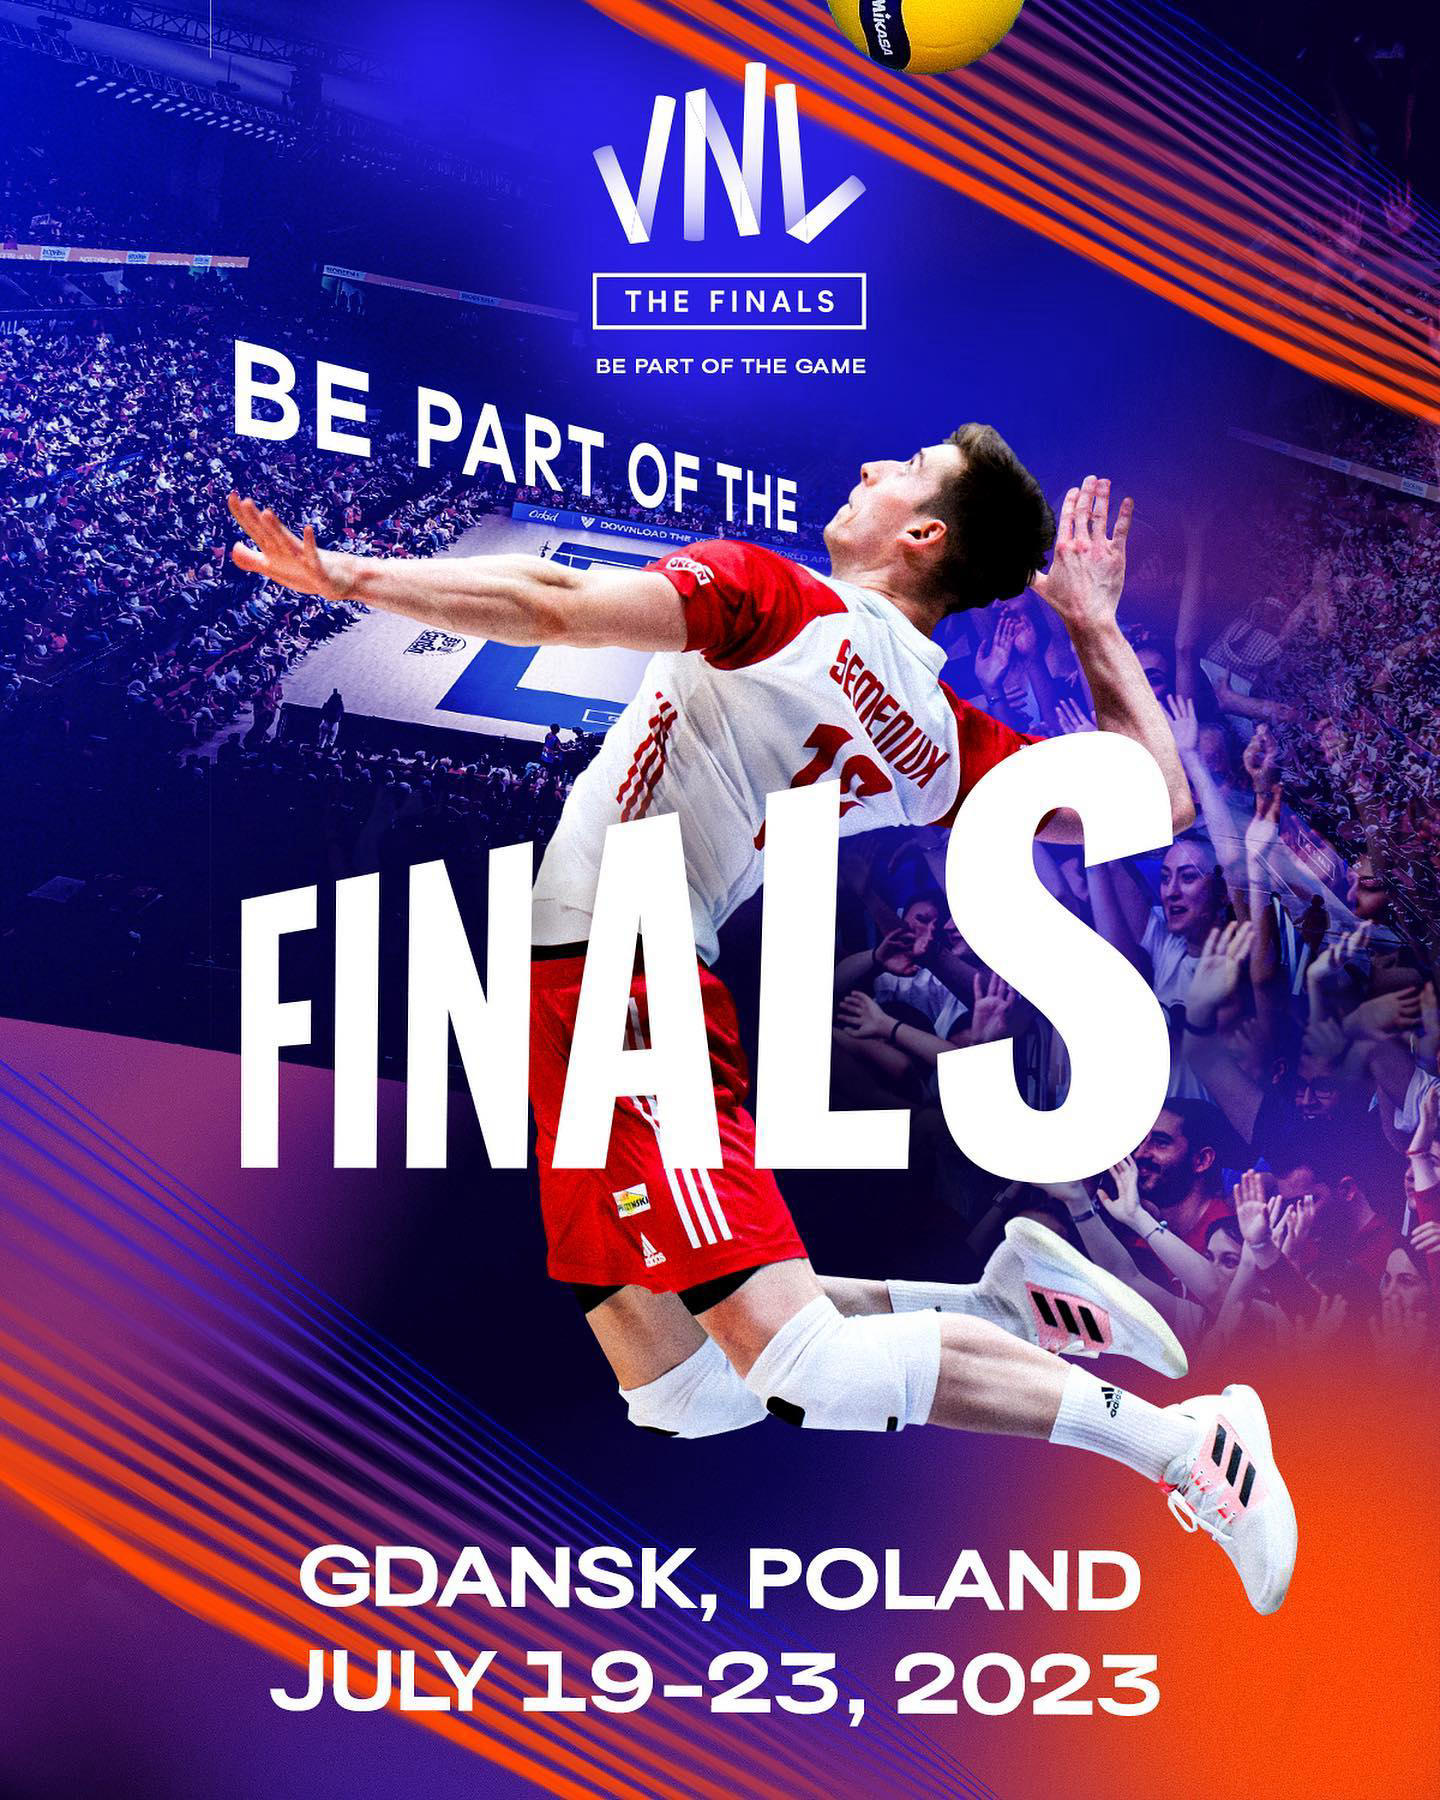 Volleyball World - 2023 Men’s #VNLFinals in the POLAND 🇵🇱